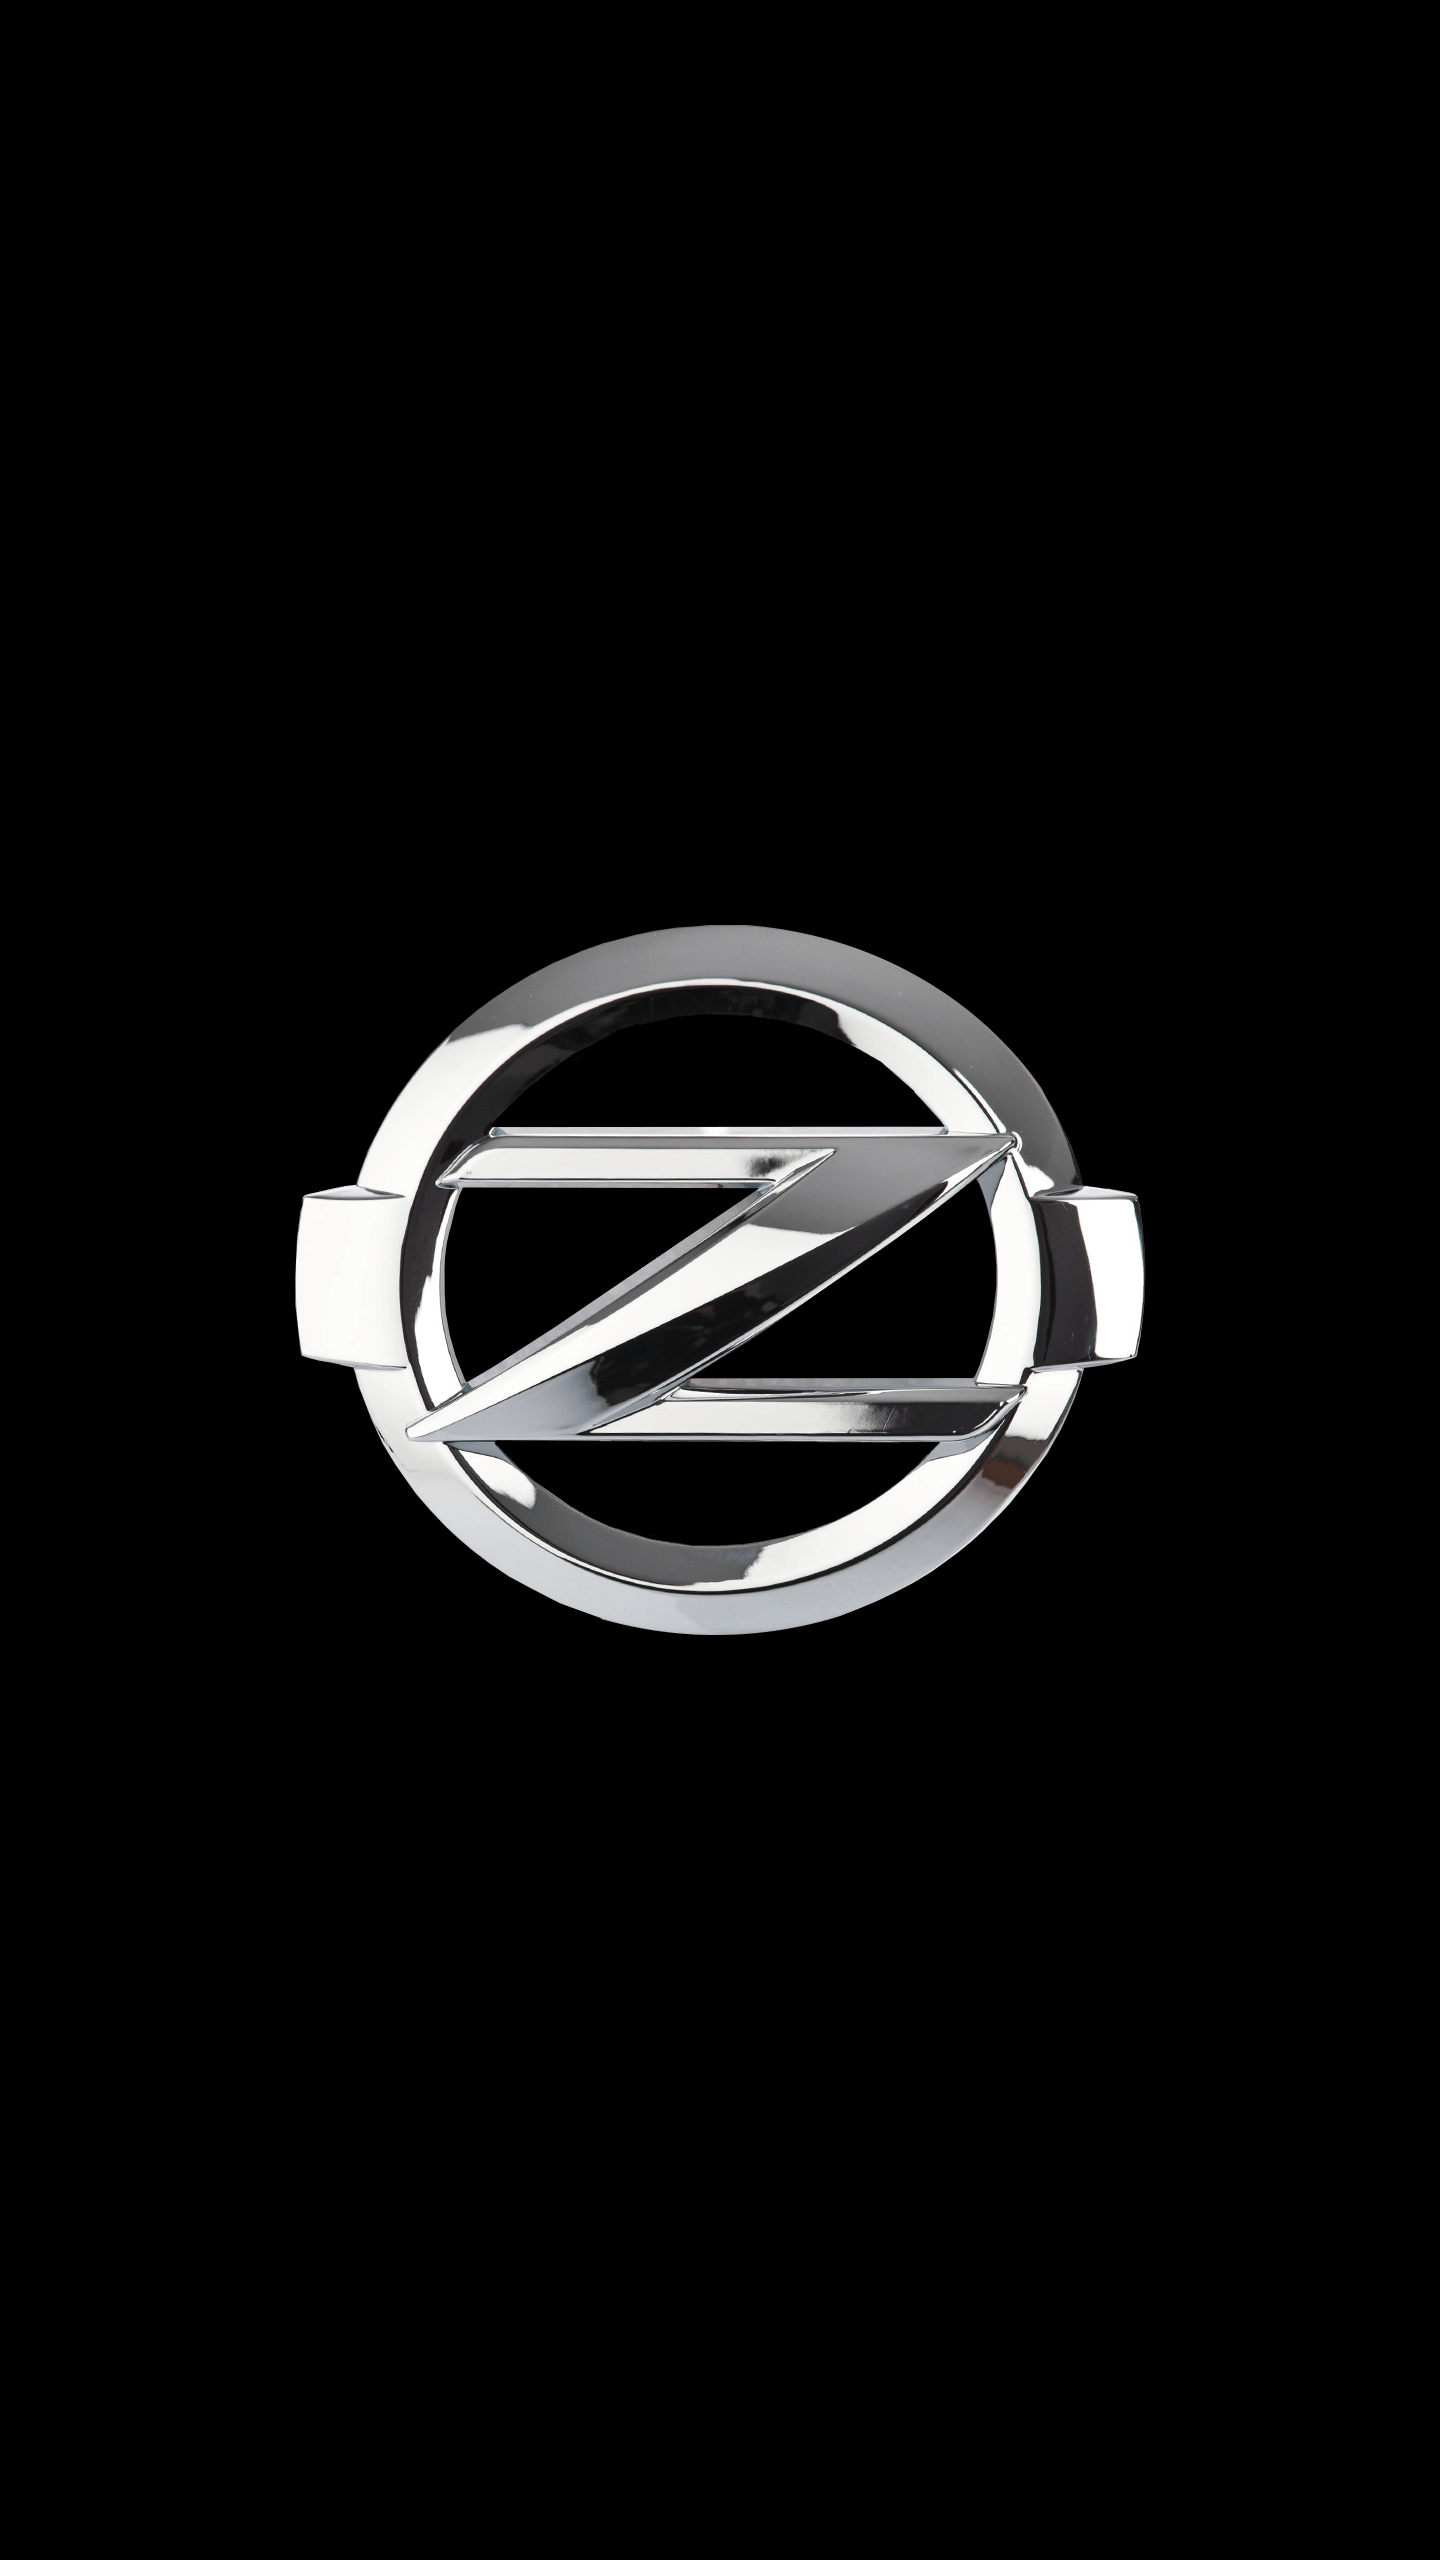 370Z Logo - Nissan 370Z Logo - Fulfilled Request [1440x2560] : Amoledbackgrounds